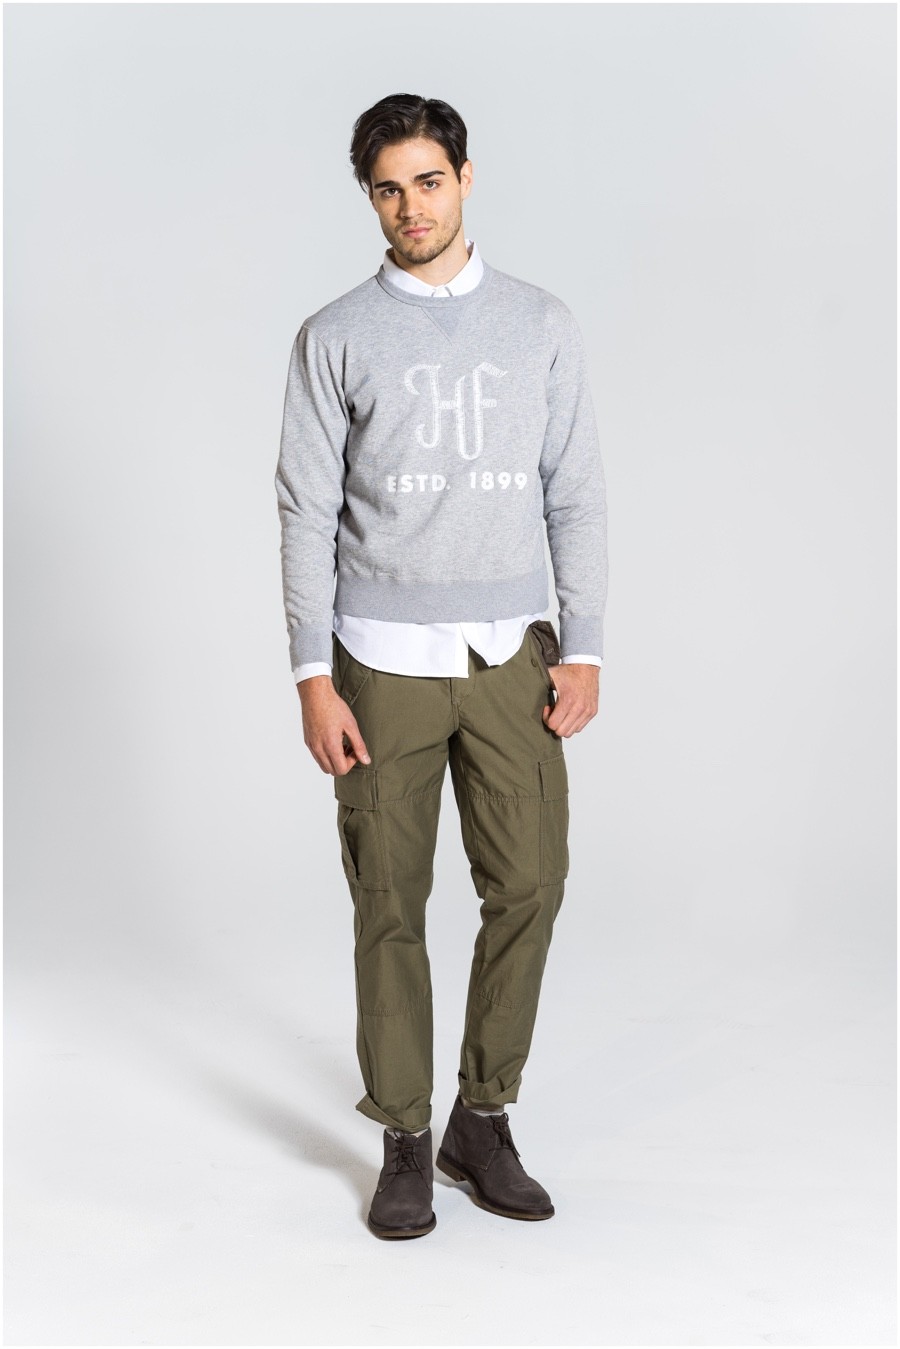 Hickey Freeman Sportswear Fall/Winter 2015